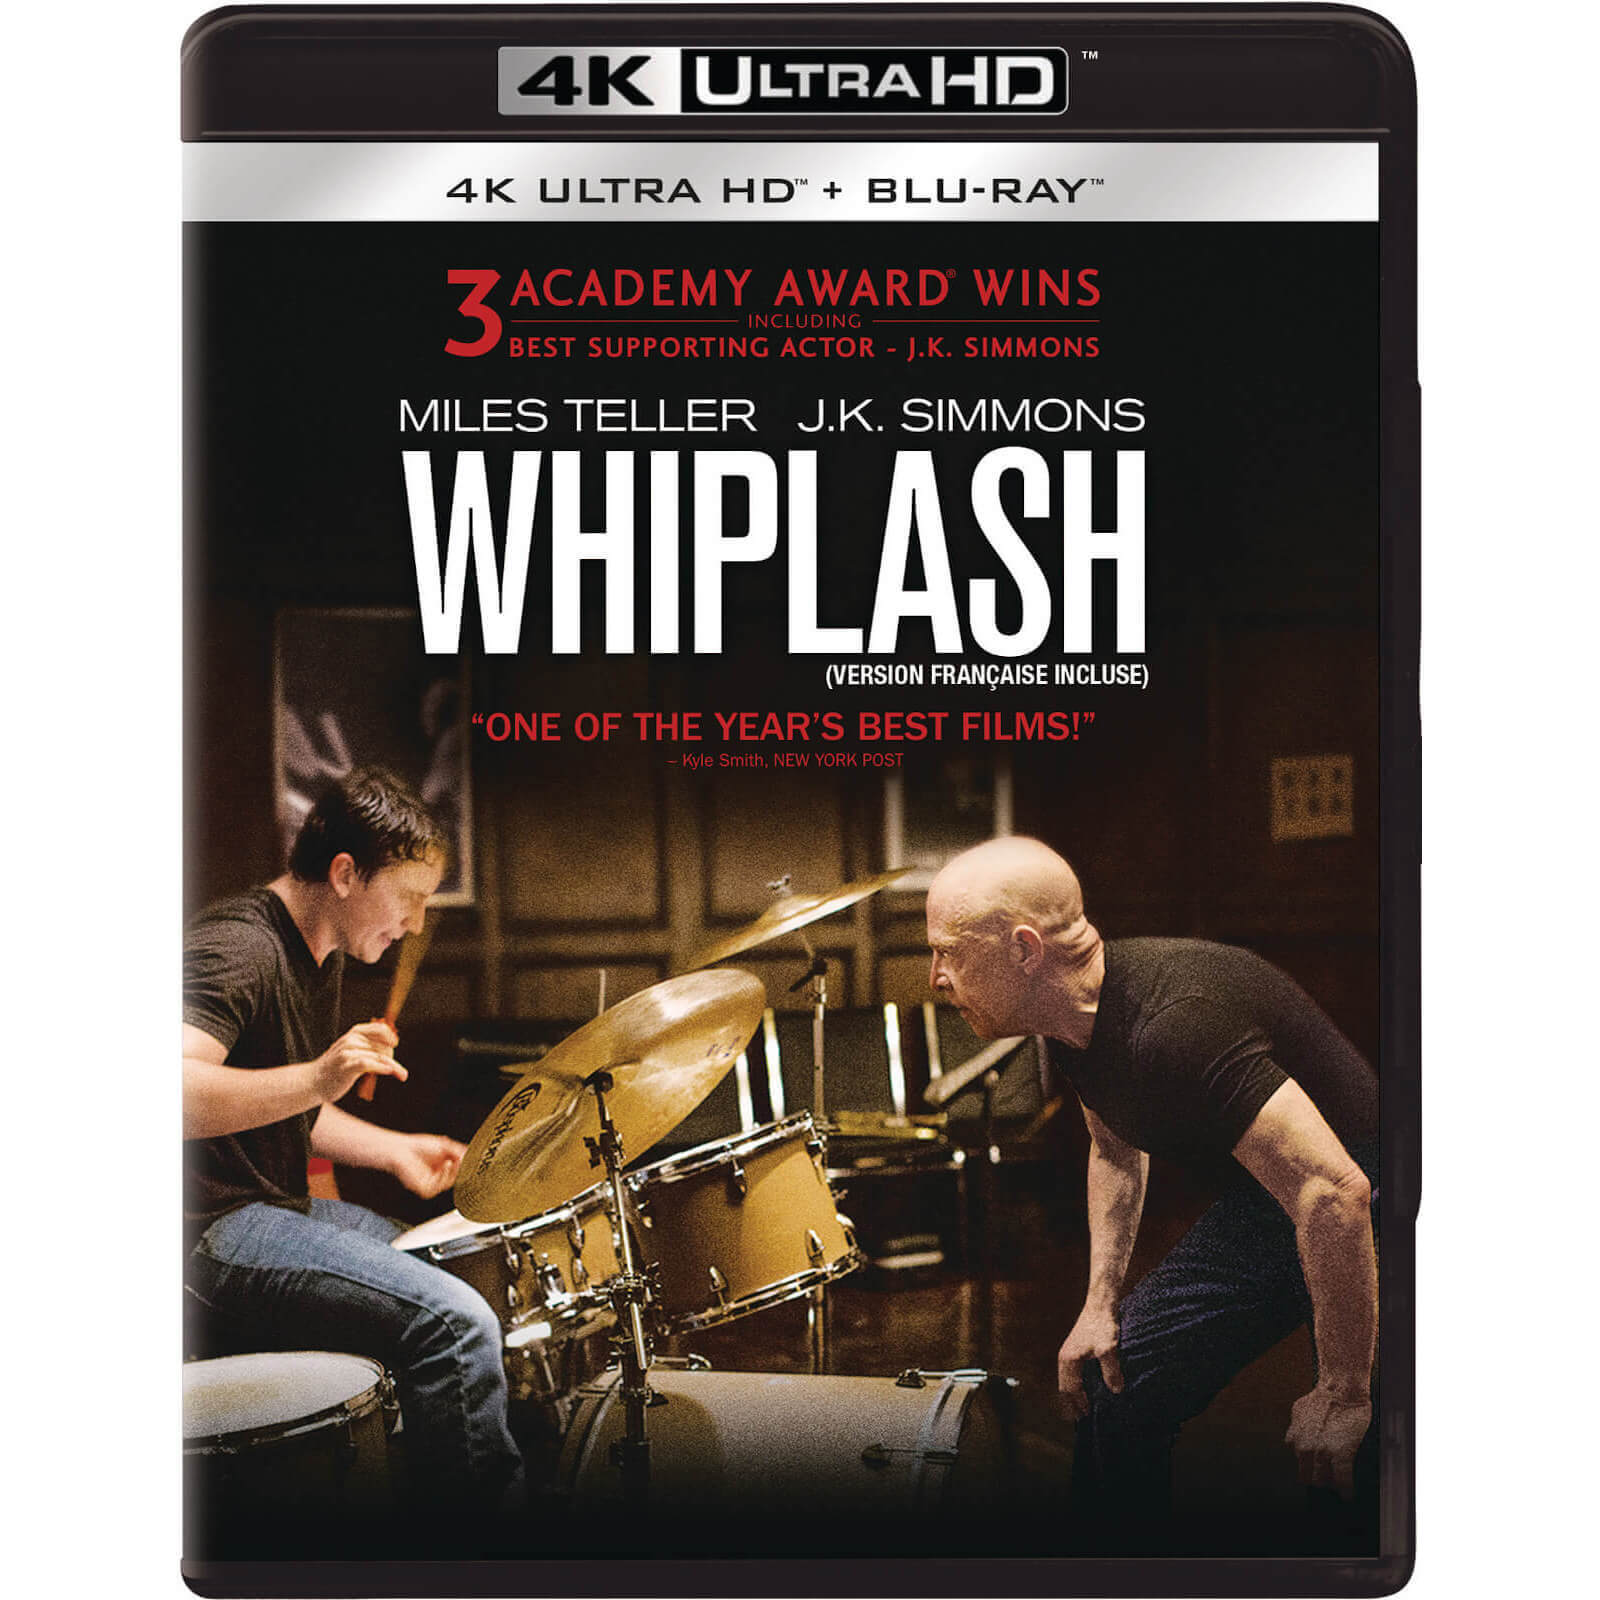 

Whiplash - 4K Ultra HD (Blu-ray 2D inclus)